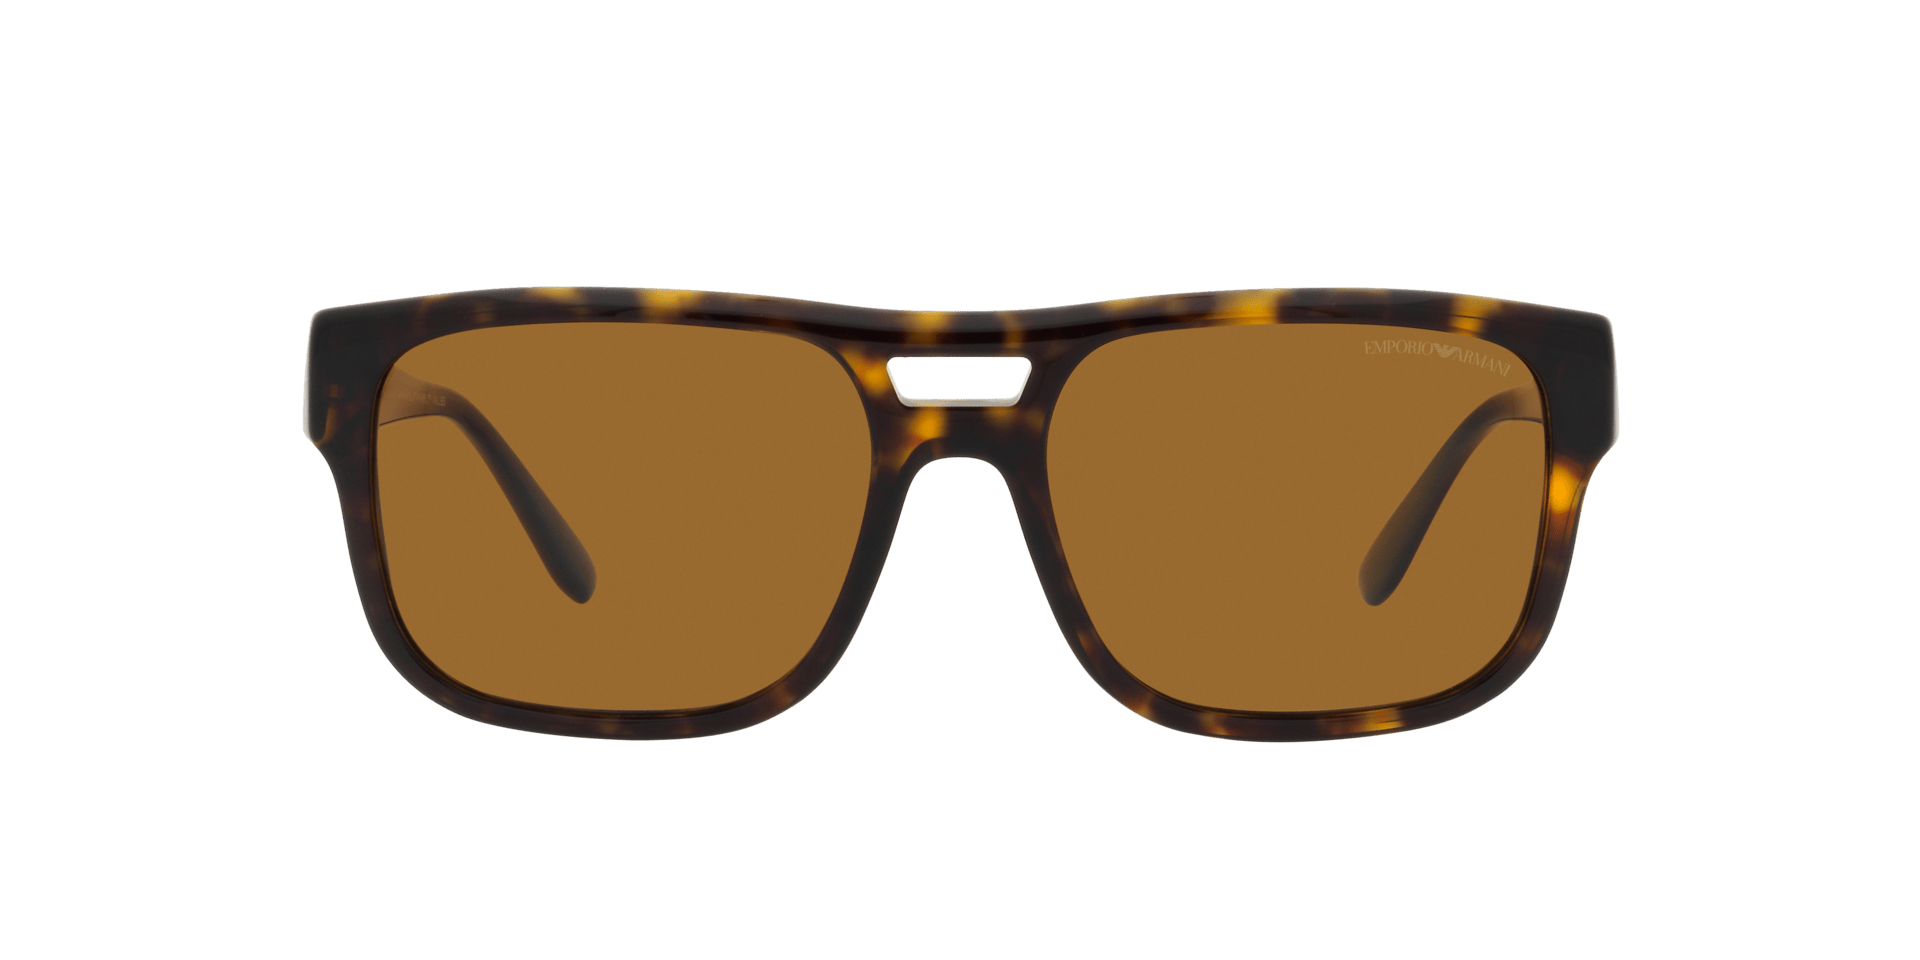 Emporio Armani sunglass replacement lenses by Sunglass Fix™